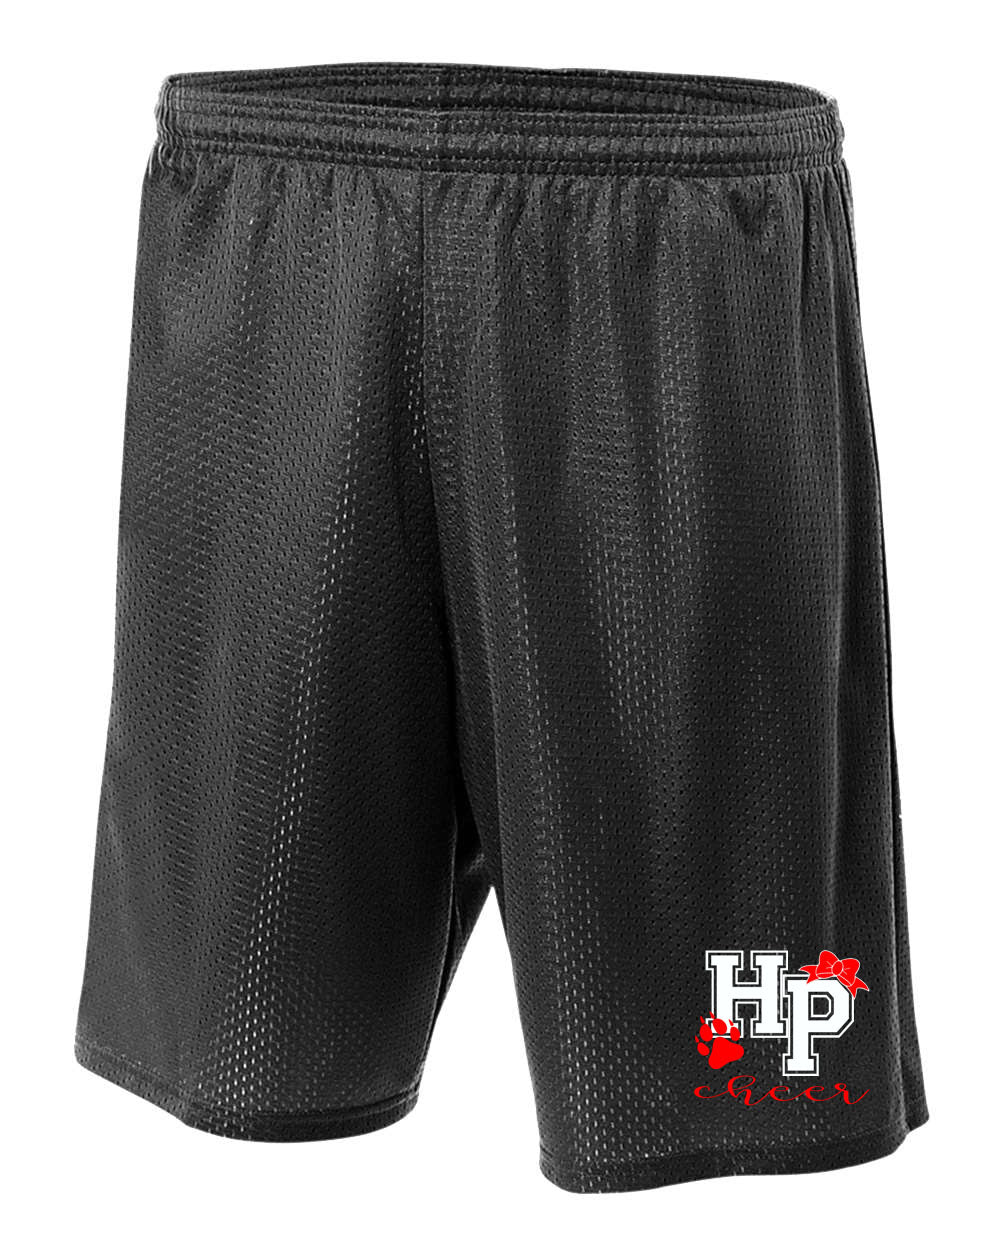 High Point Cheer Design 3 Shorts